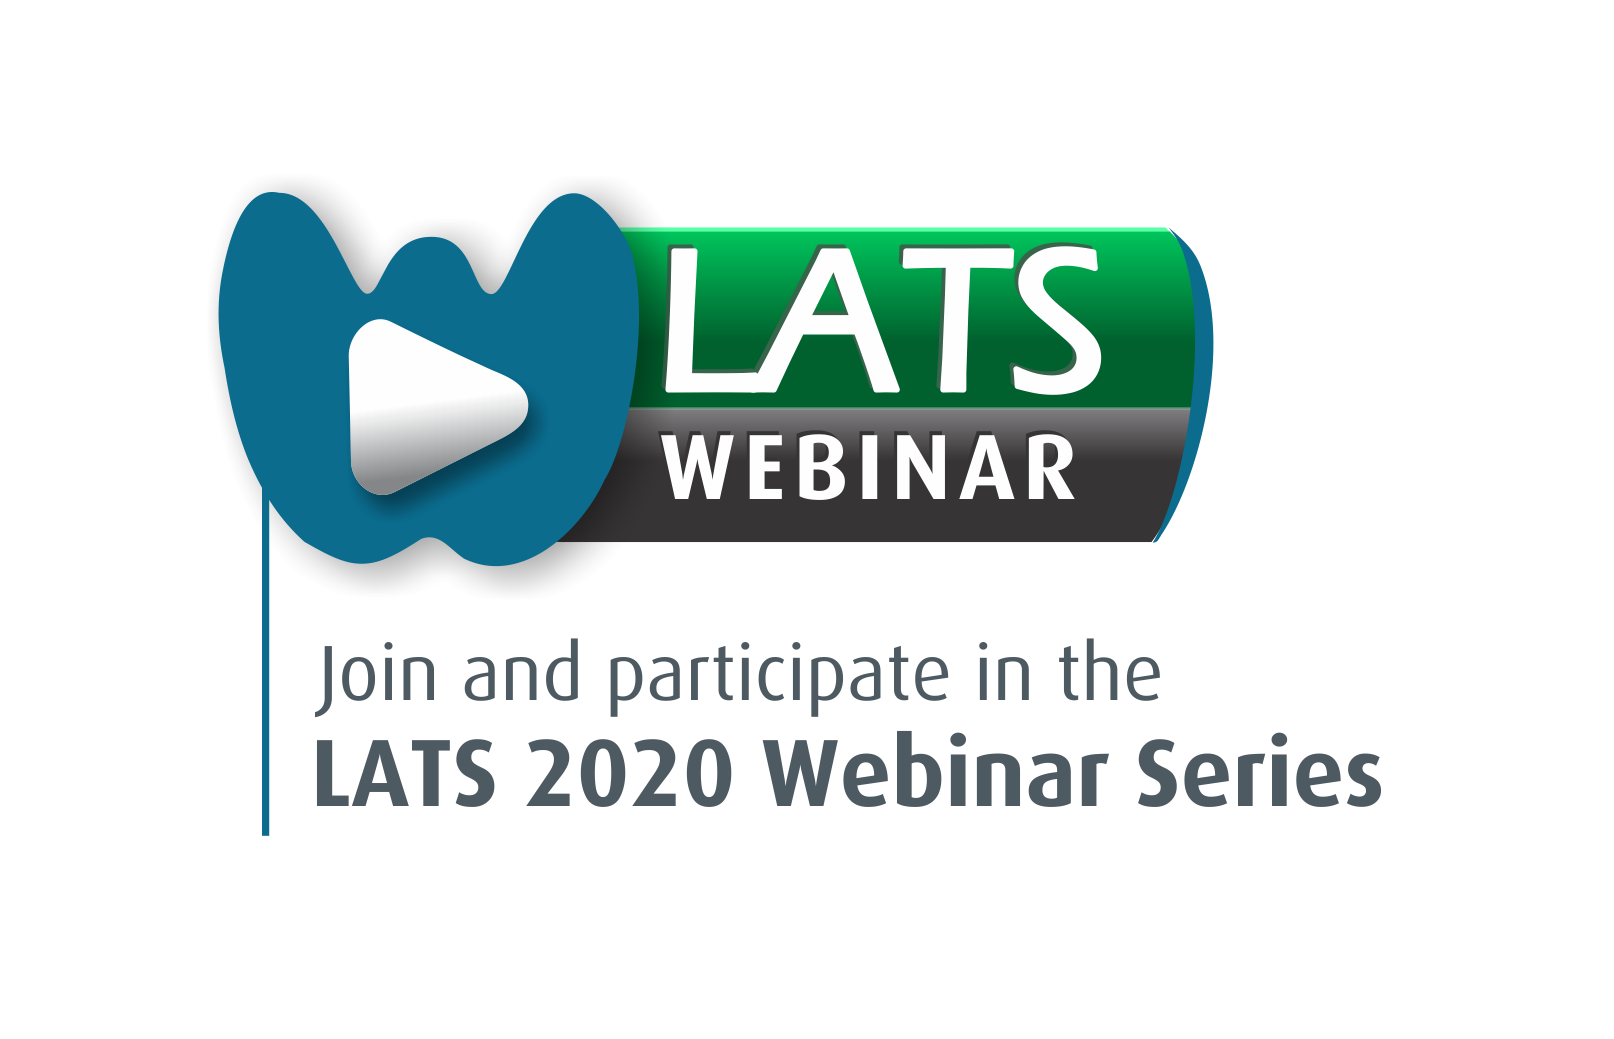 LATS 2020 Webinars Series - Registrations Released